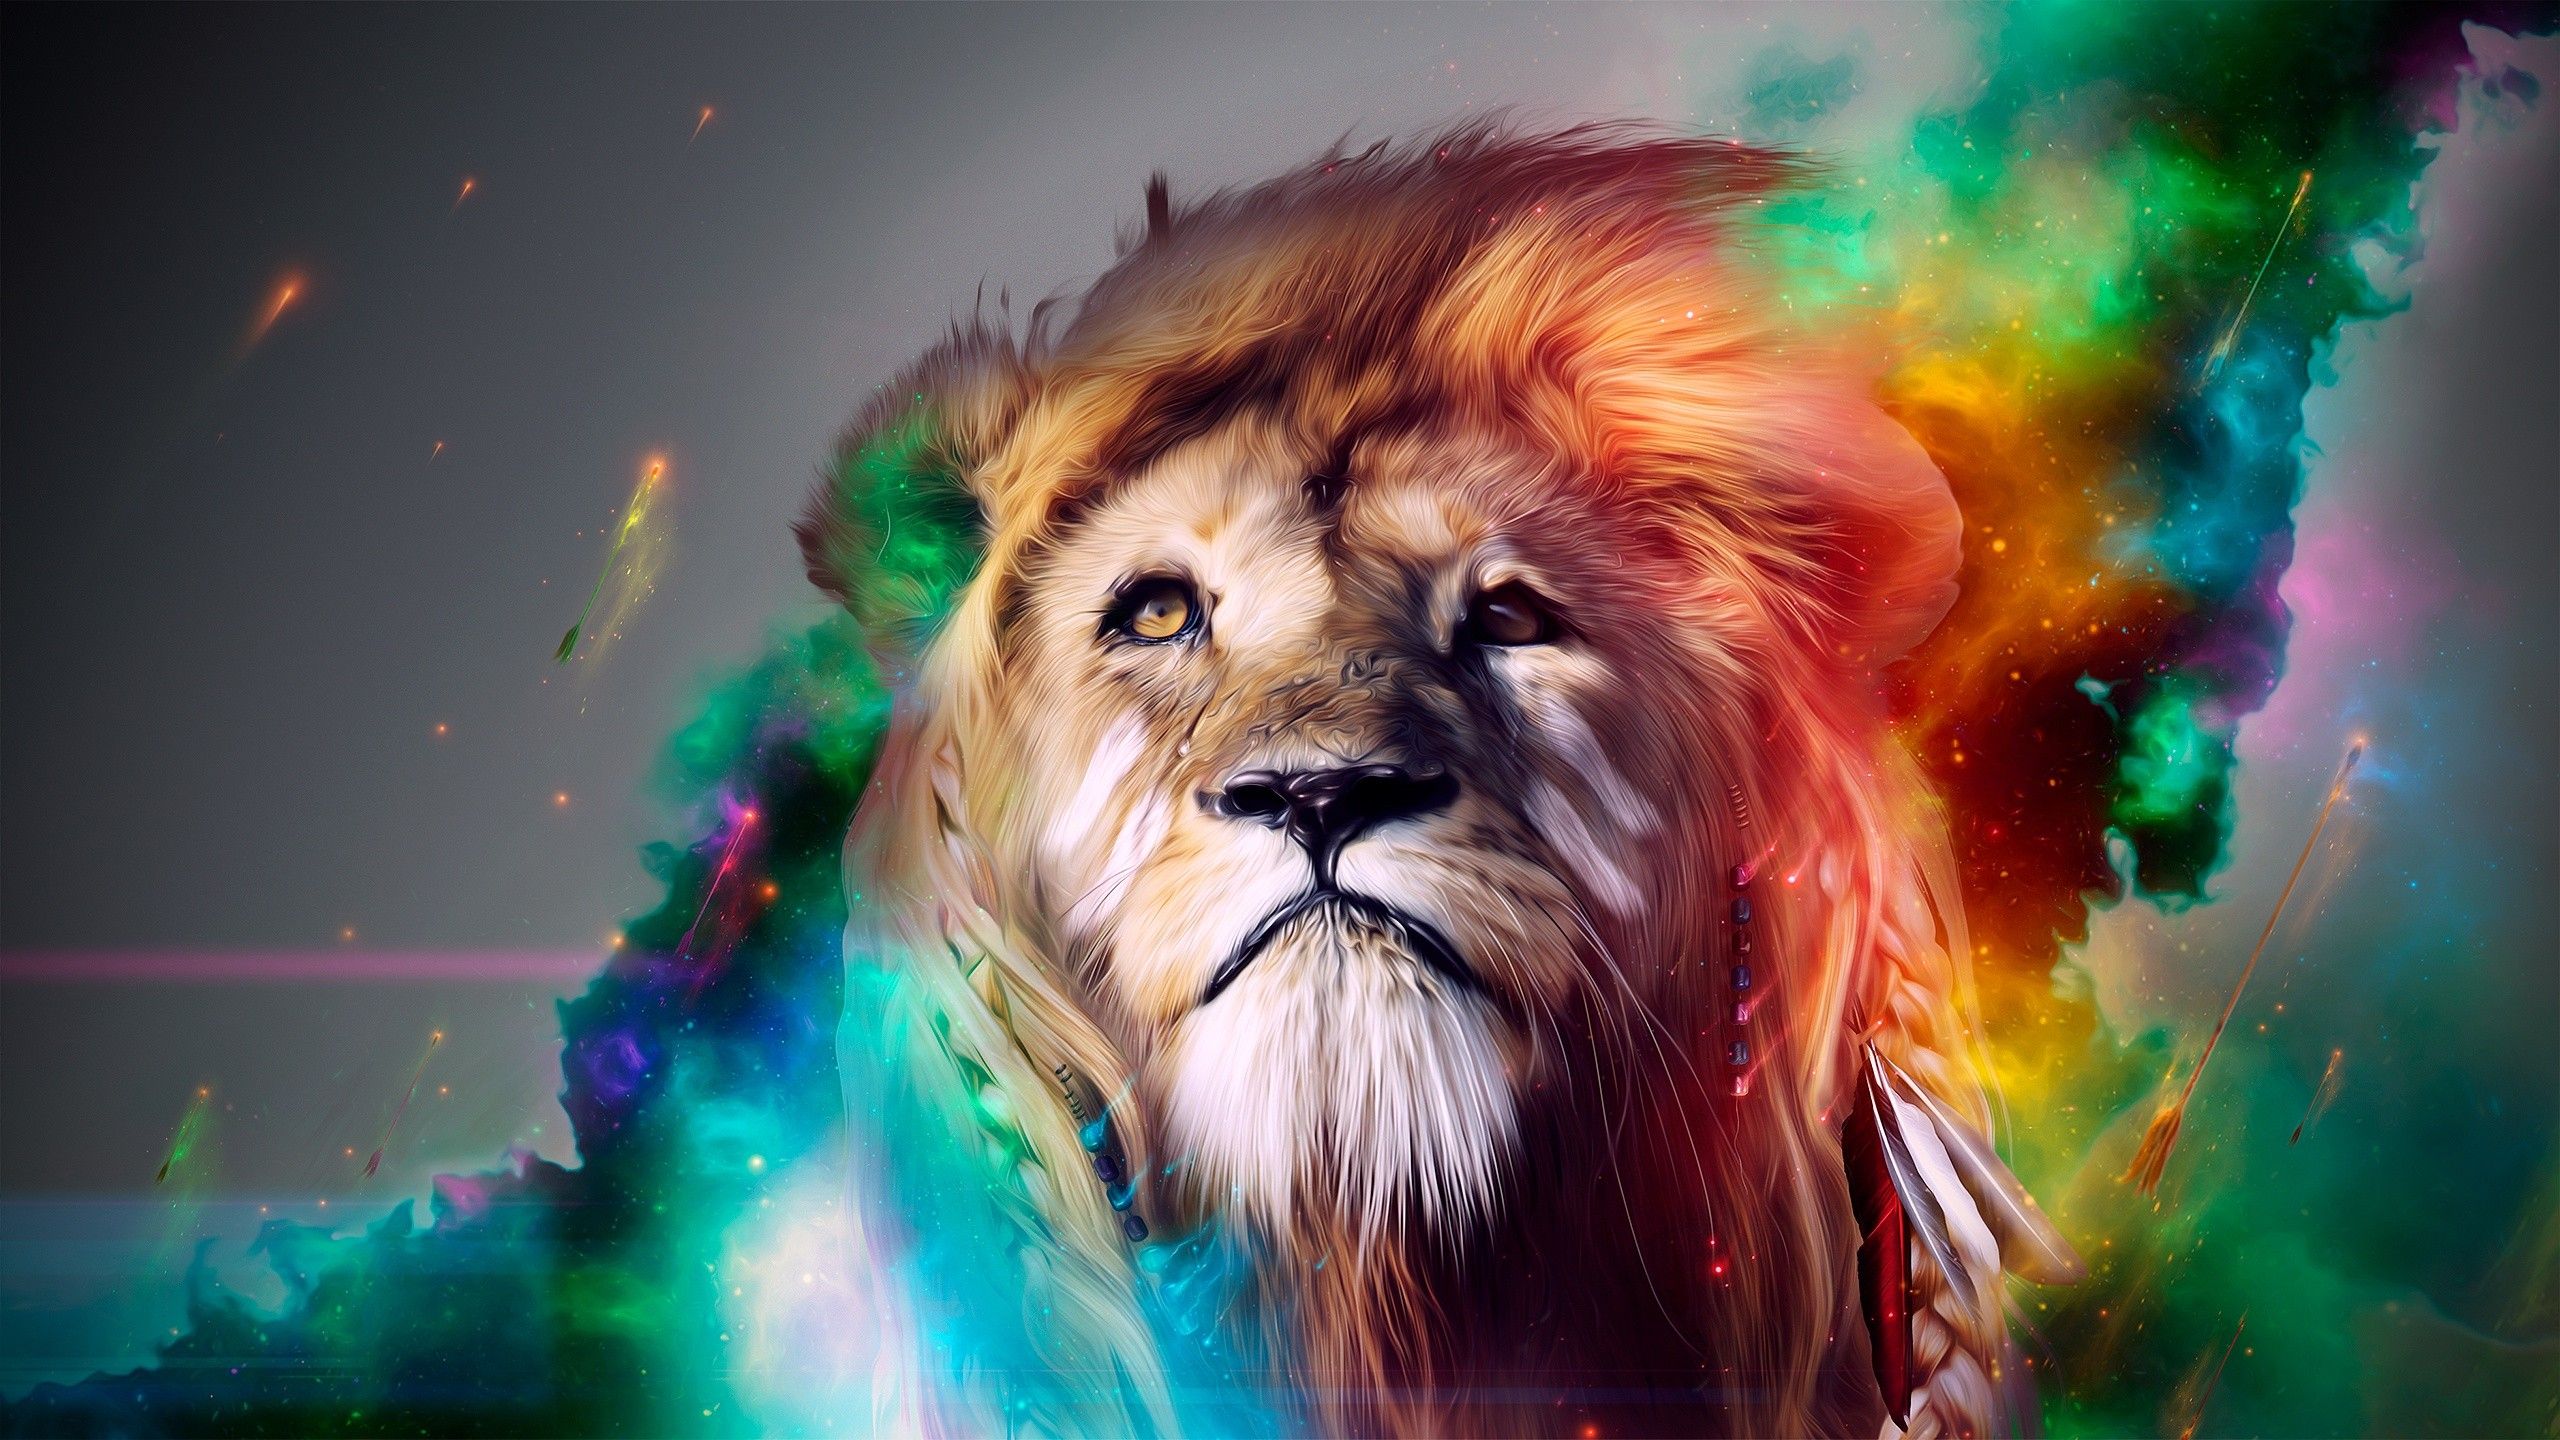 lion image download